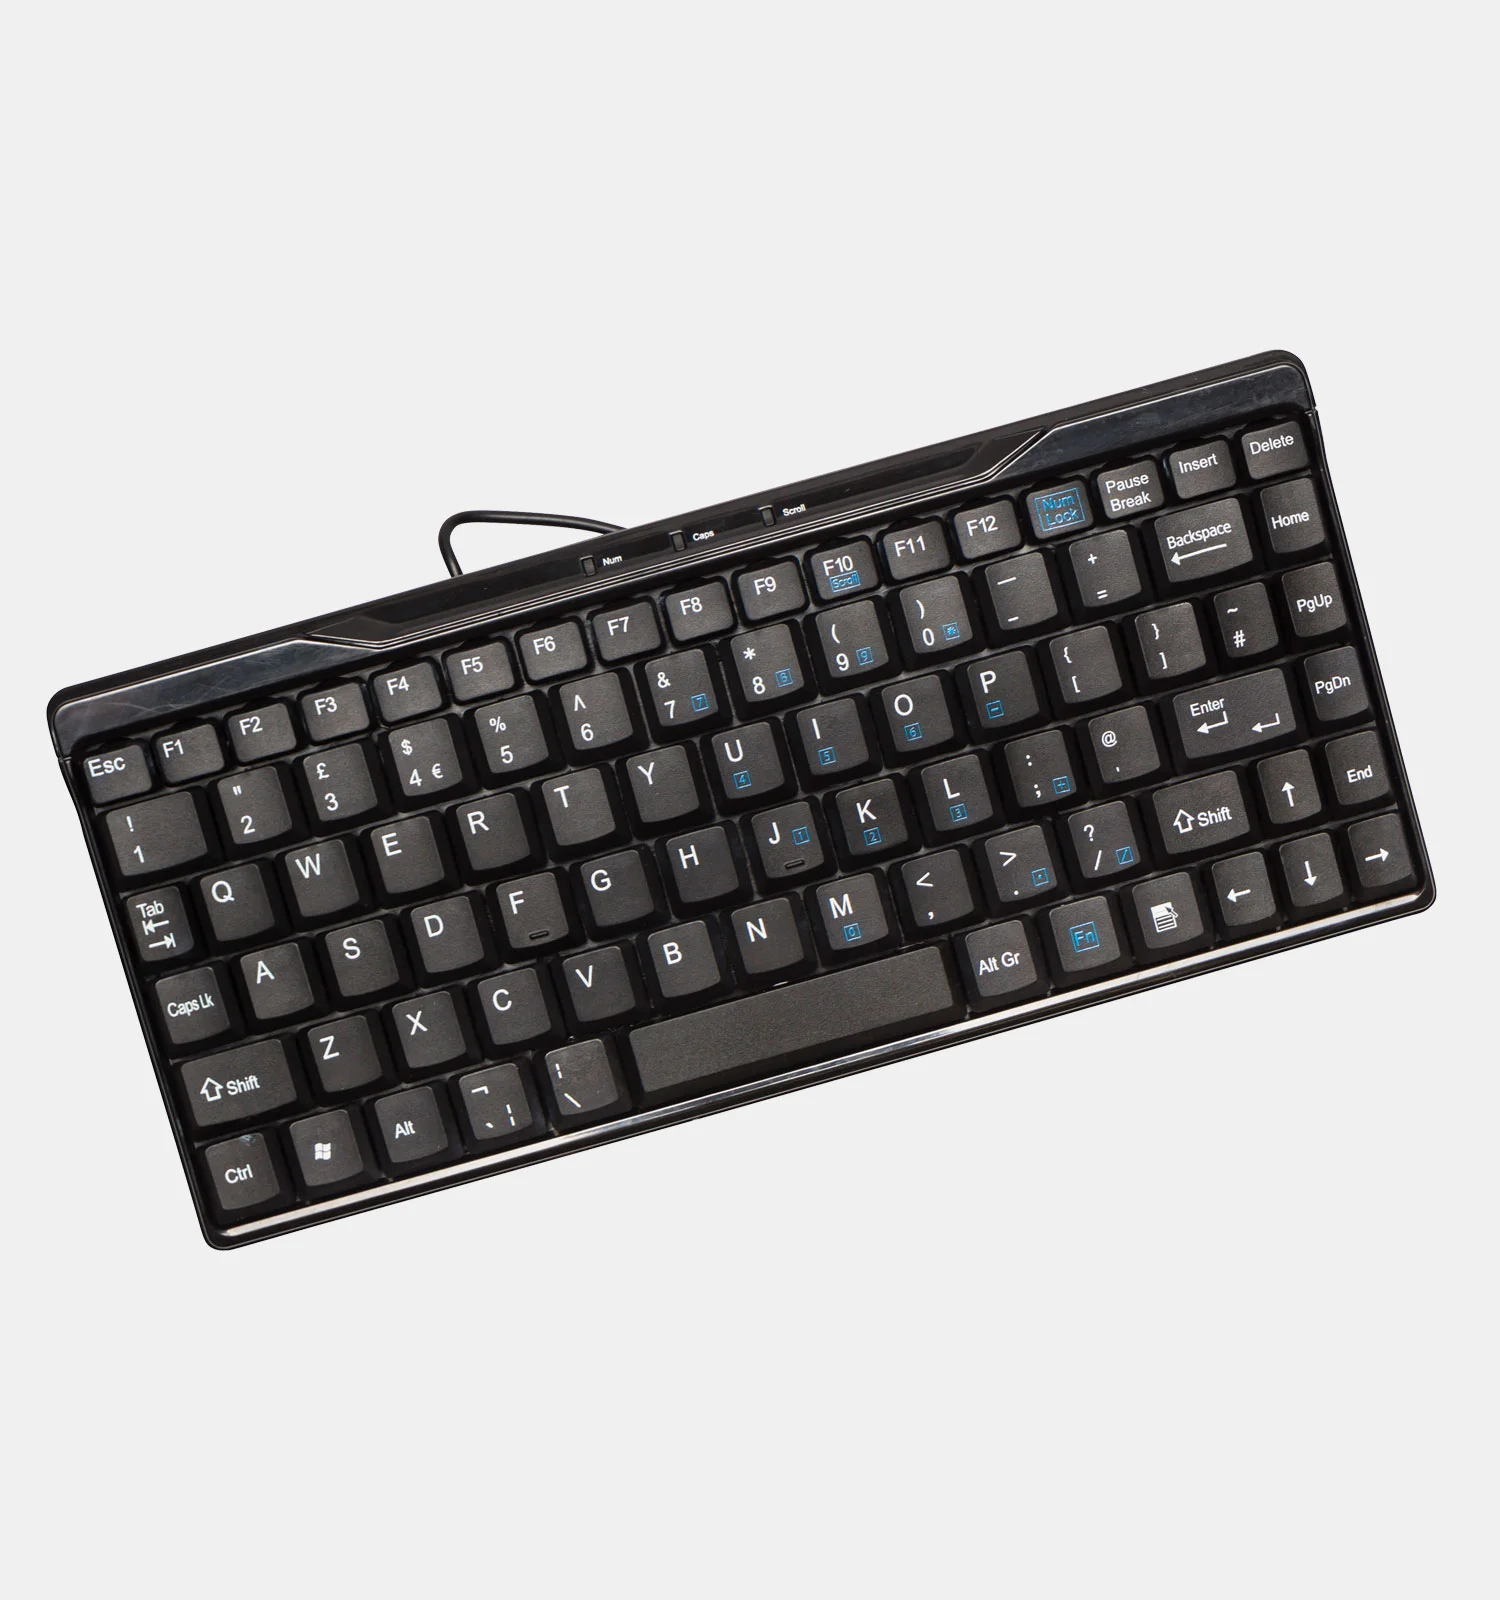 Suppliers of Mini Keyboard UK